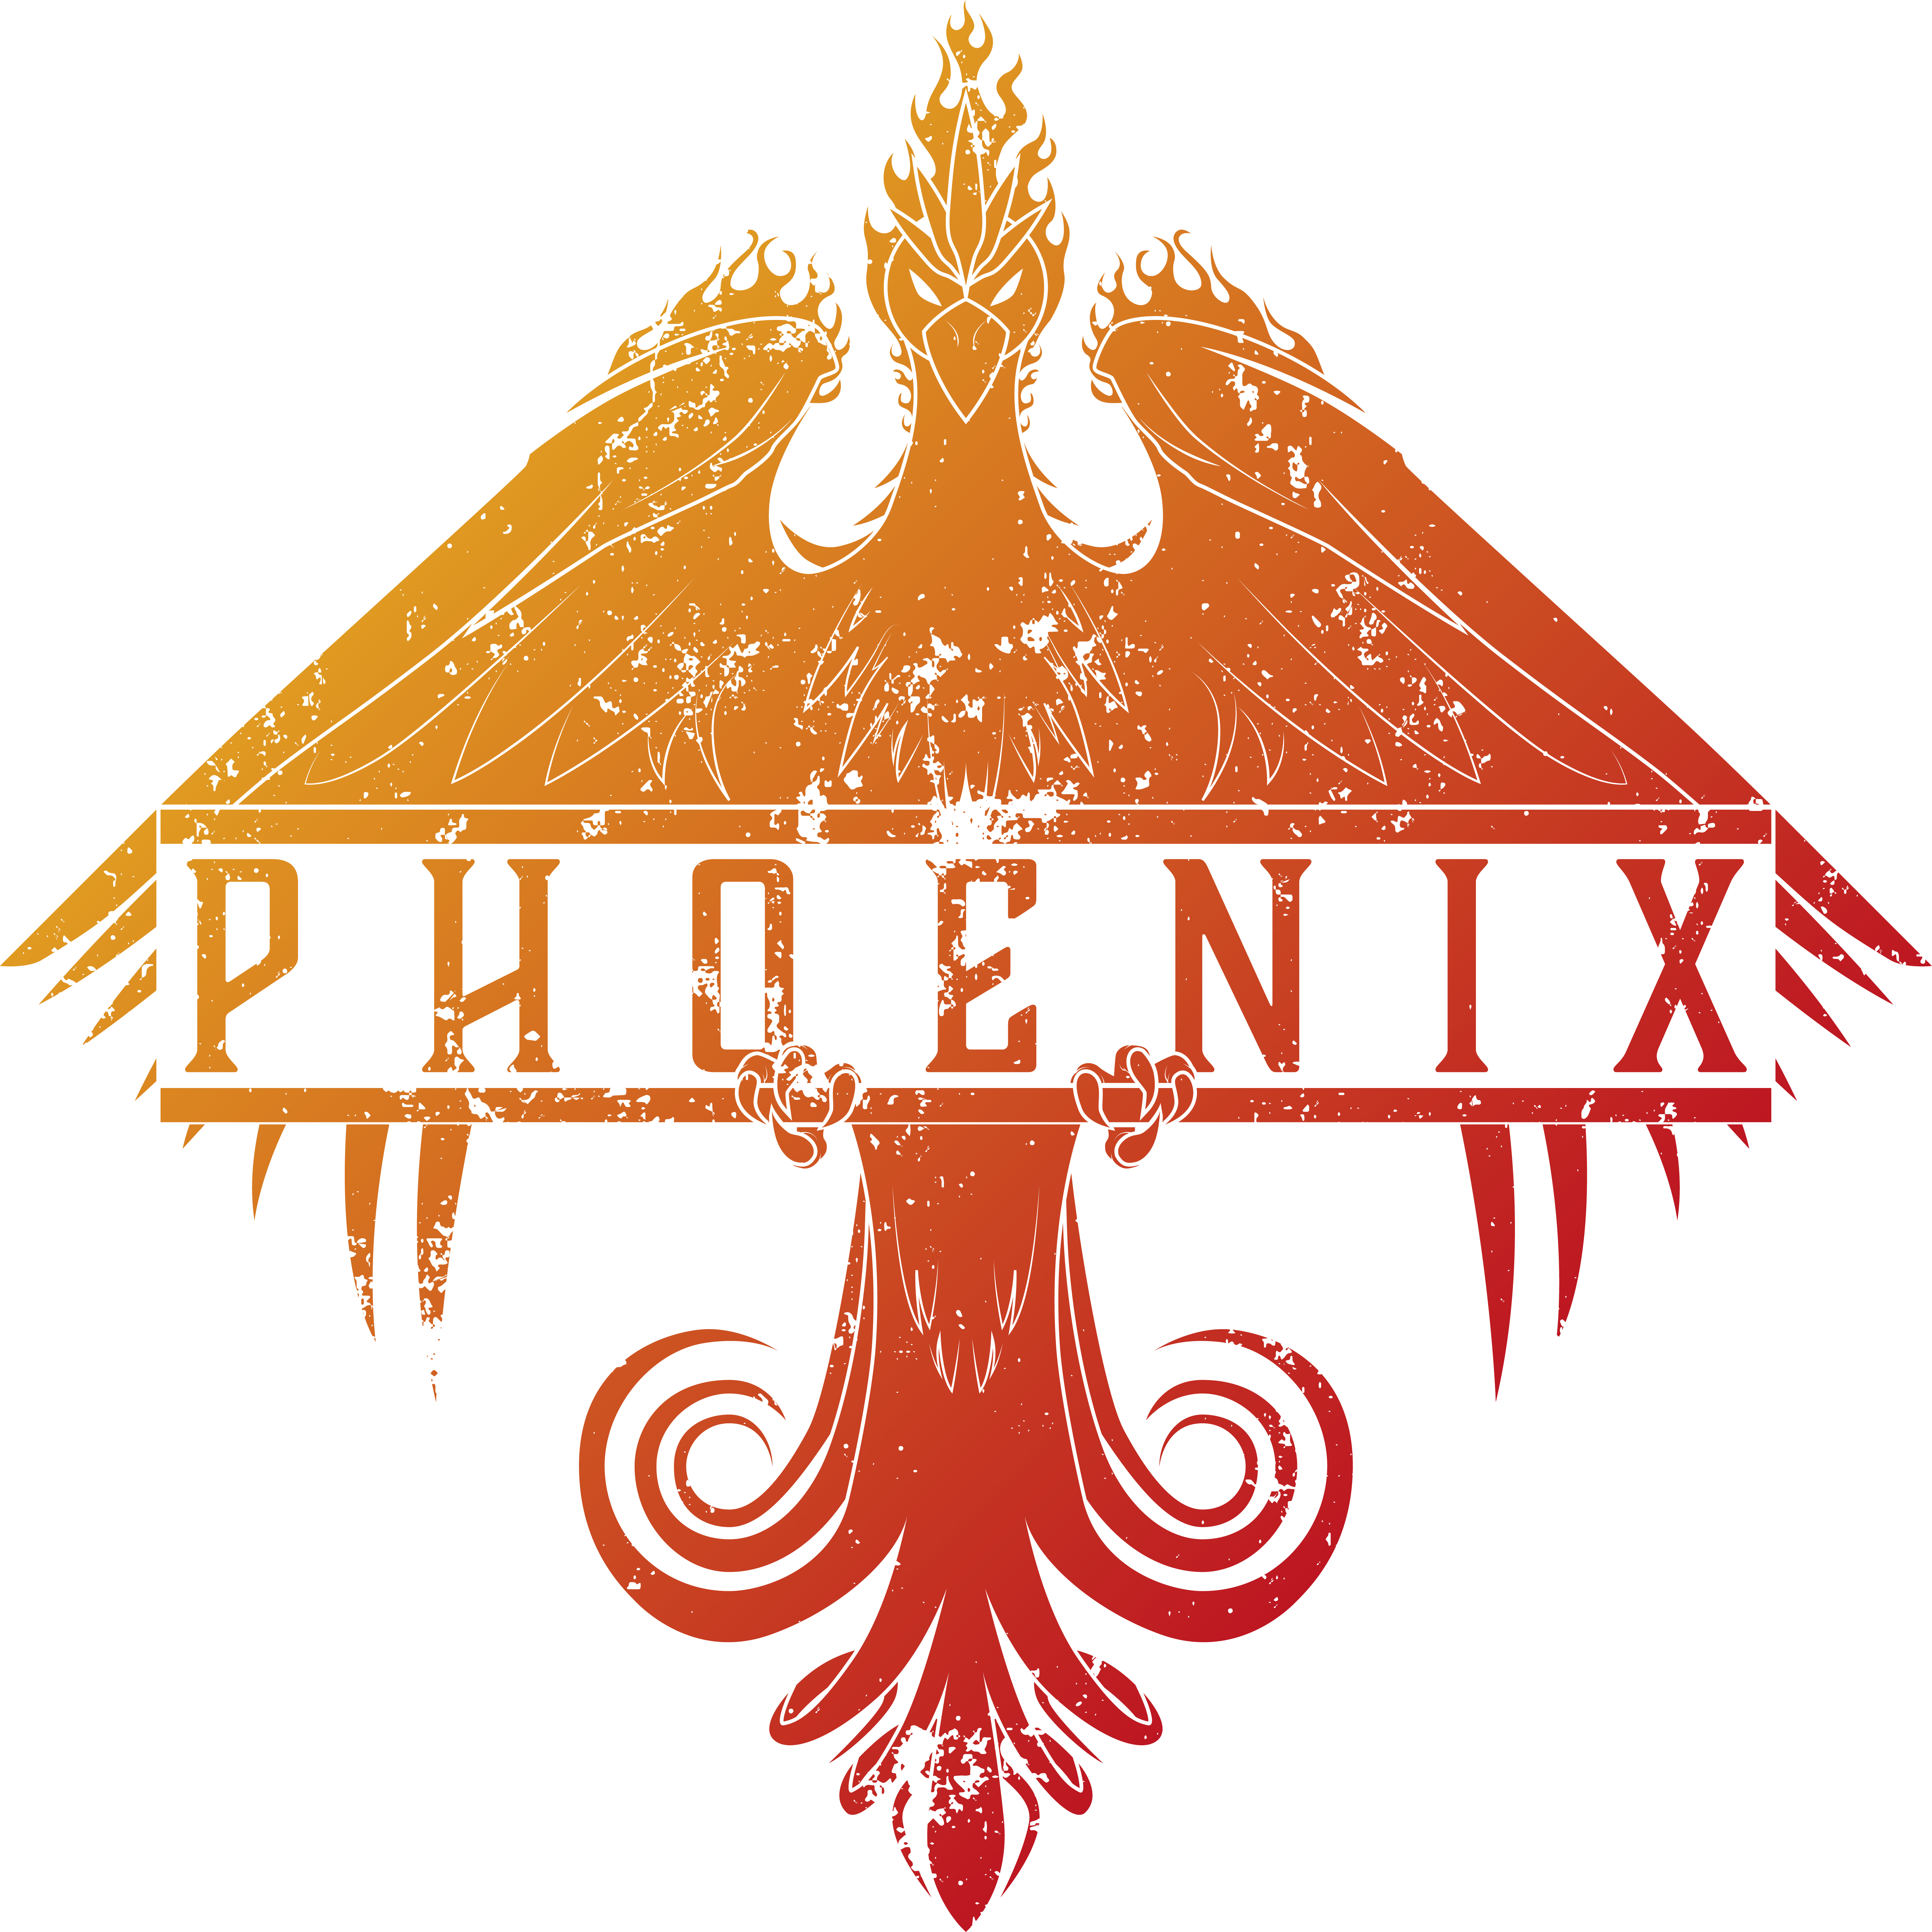 Pheonix Rebrand Service